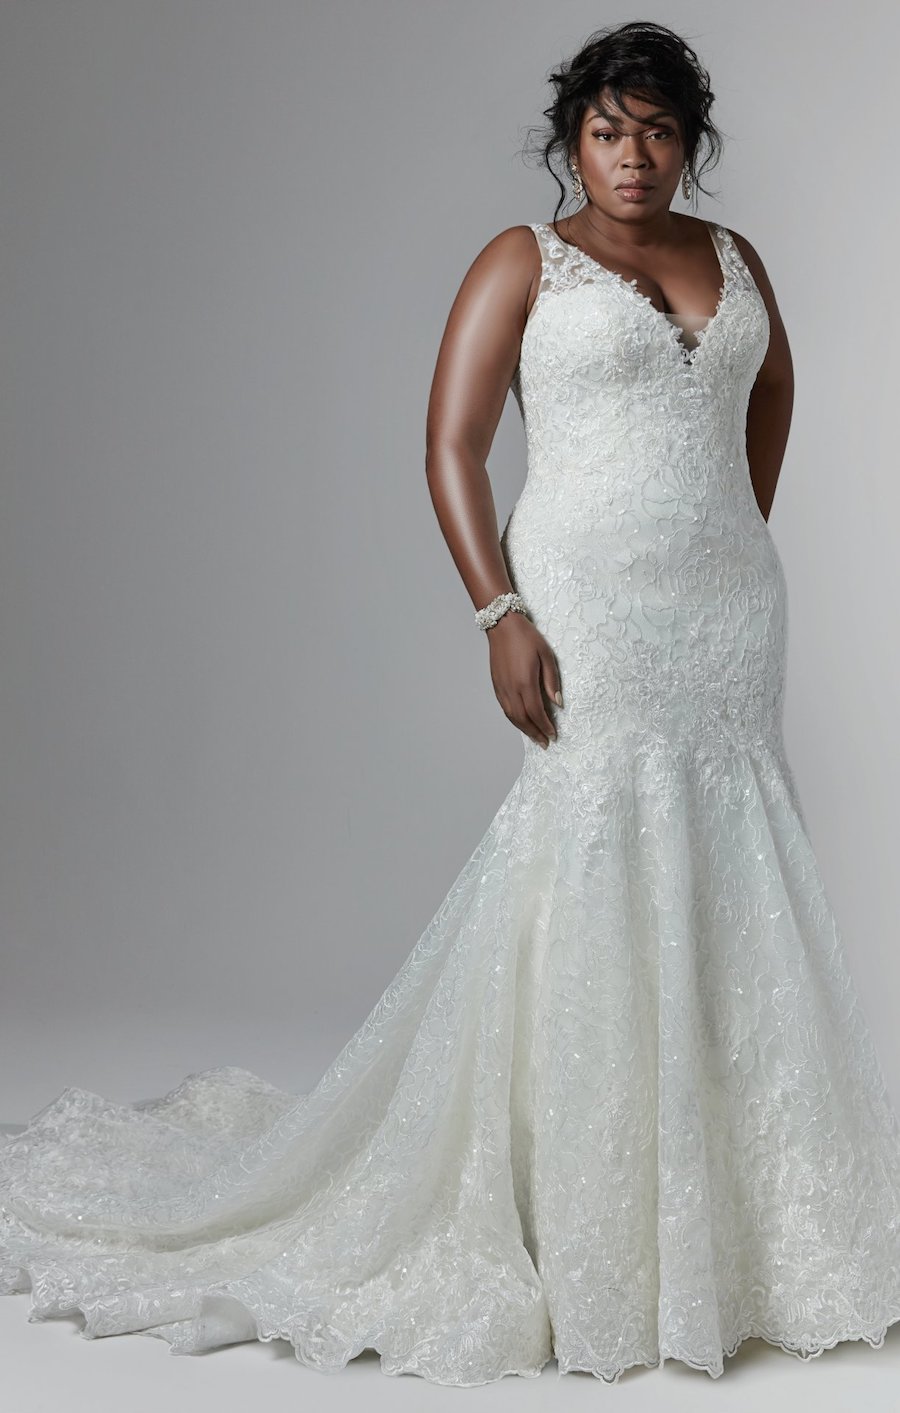 Plus Size Wedding Dress by Sottero and Midgley -Logan